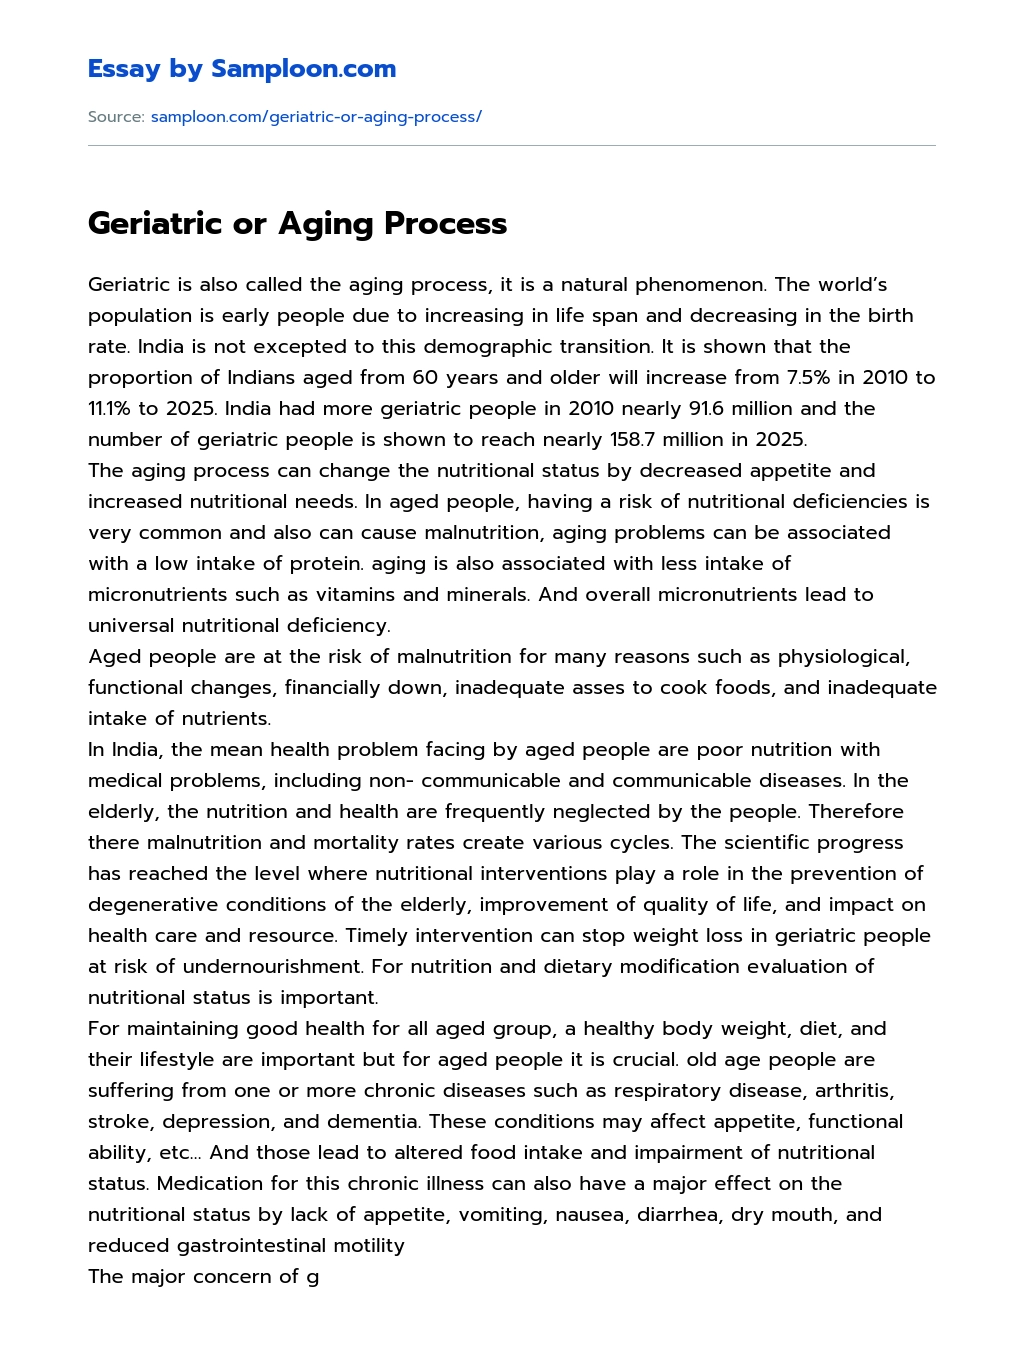 Geriatric or Aging Process essay